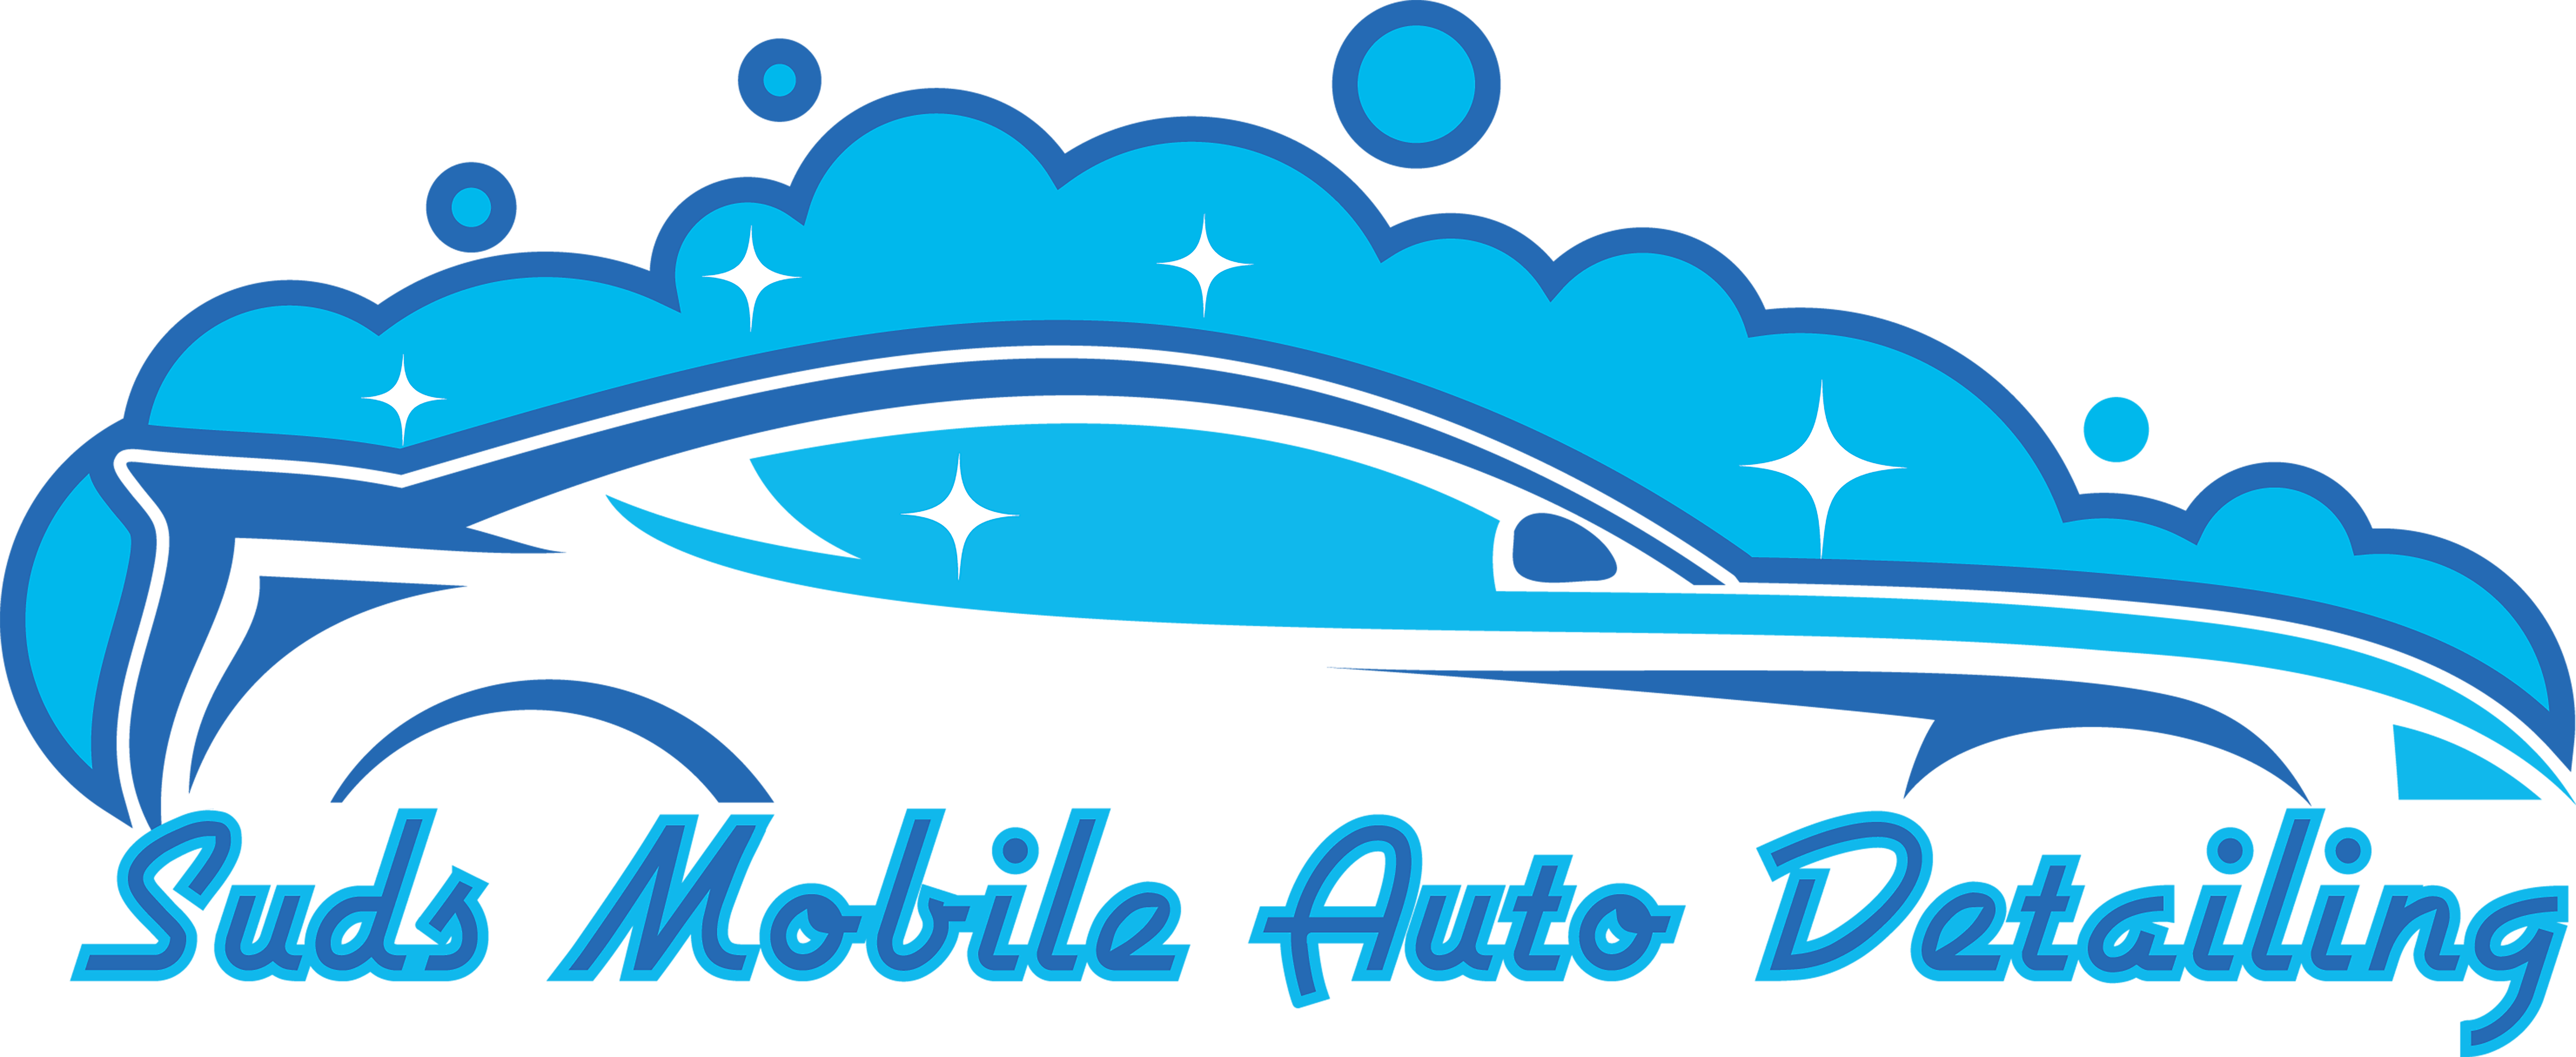 Suds Mobile Auto Detailing - Suds Mobile Auto Detailing (12000x4922)